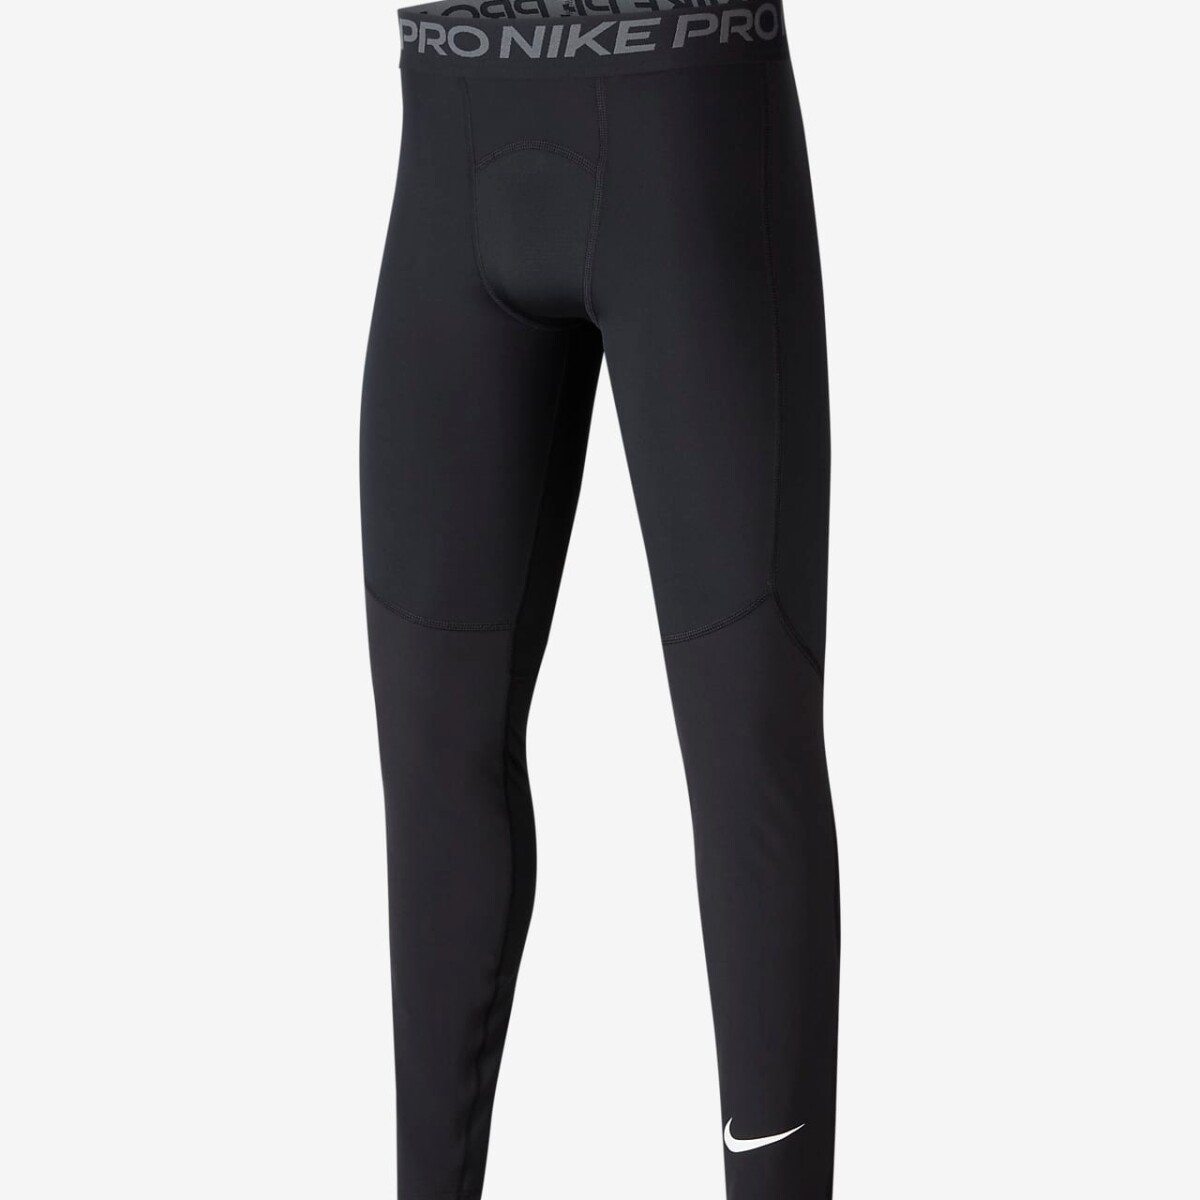 Calza Nike Training Niño Tight Black - Color Único 